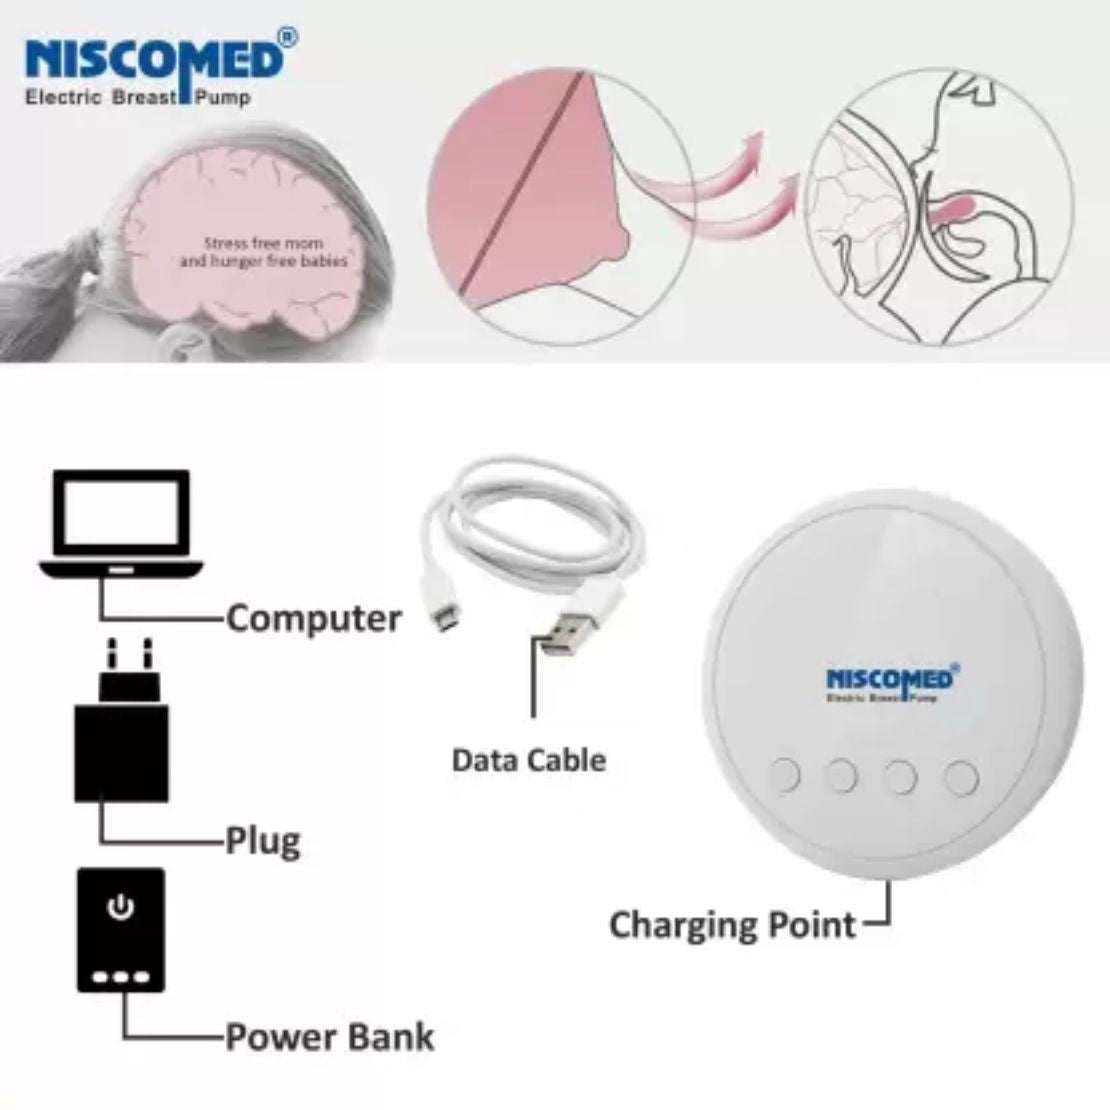 Niscomed Electric Breast Pump